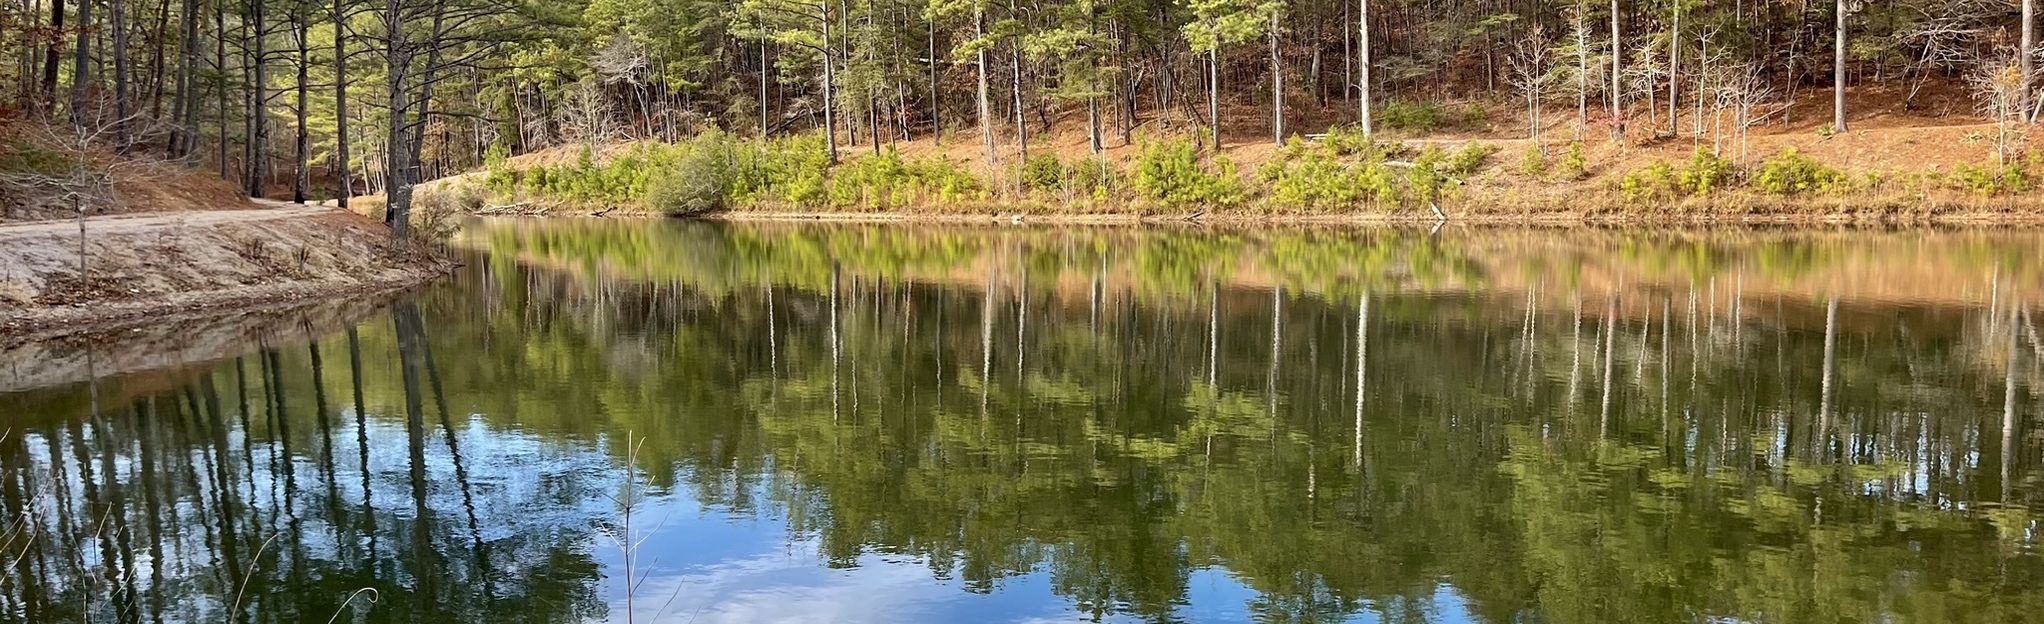 Minooka Lake Walking Trail, Alabama 2 Reviews, Map AllTrails